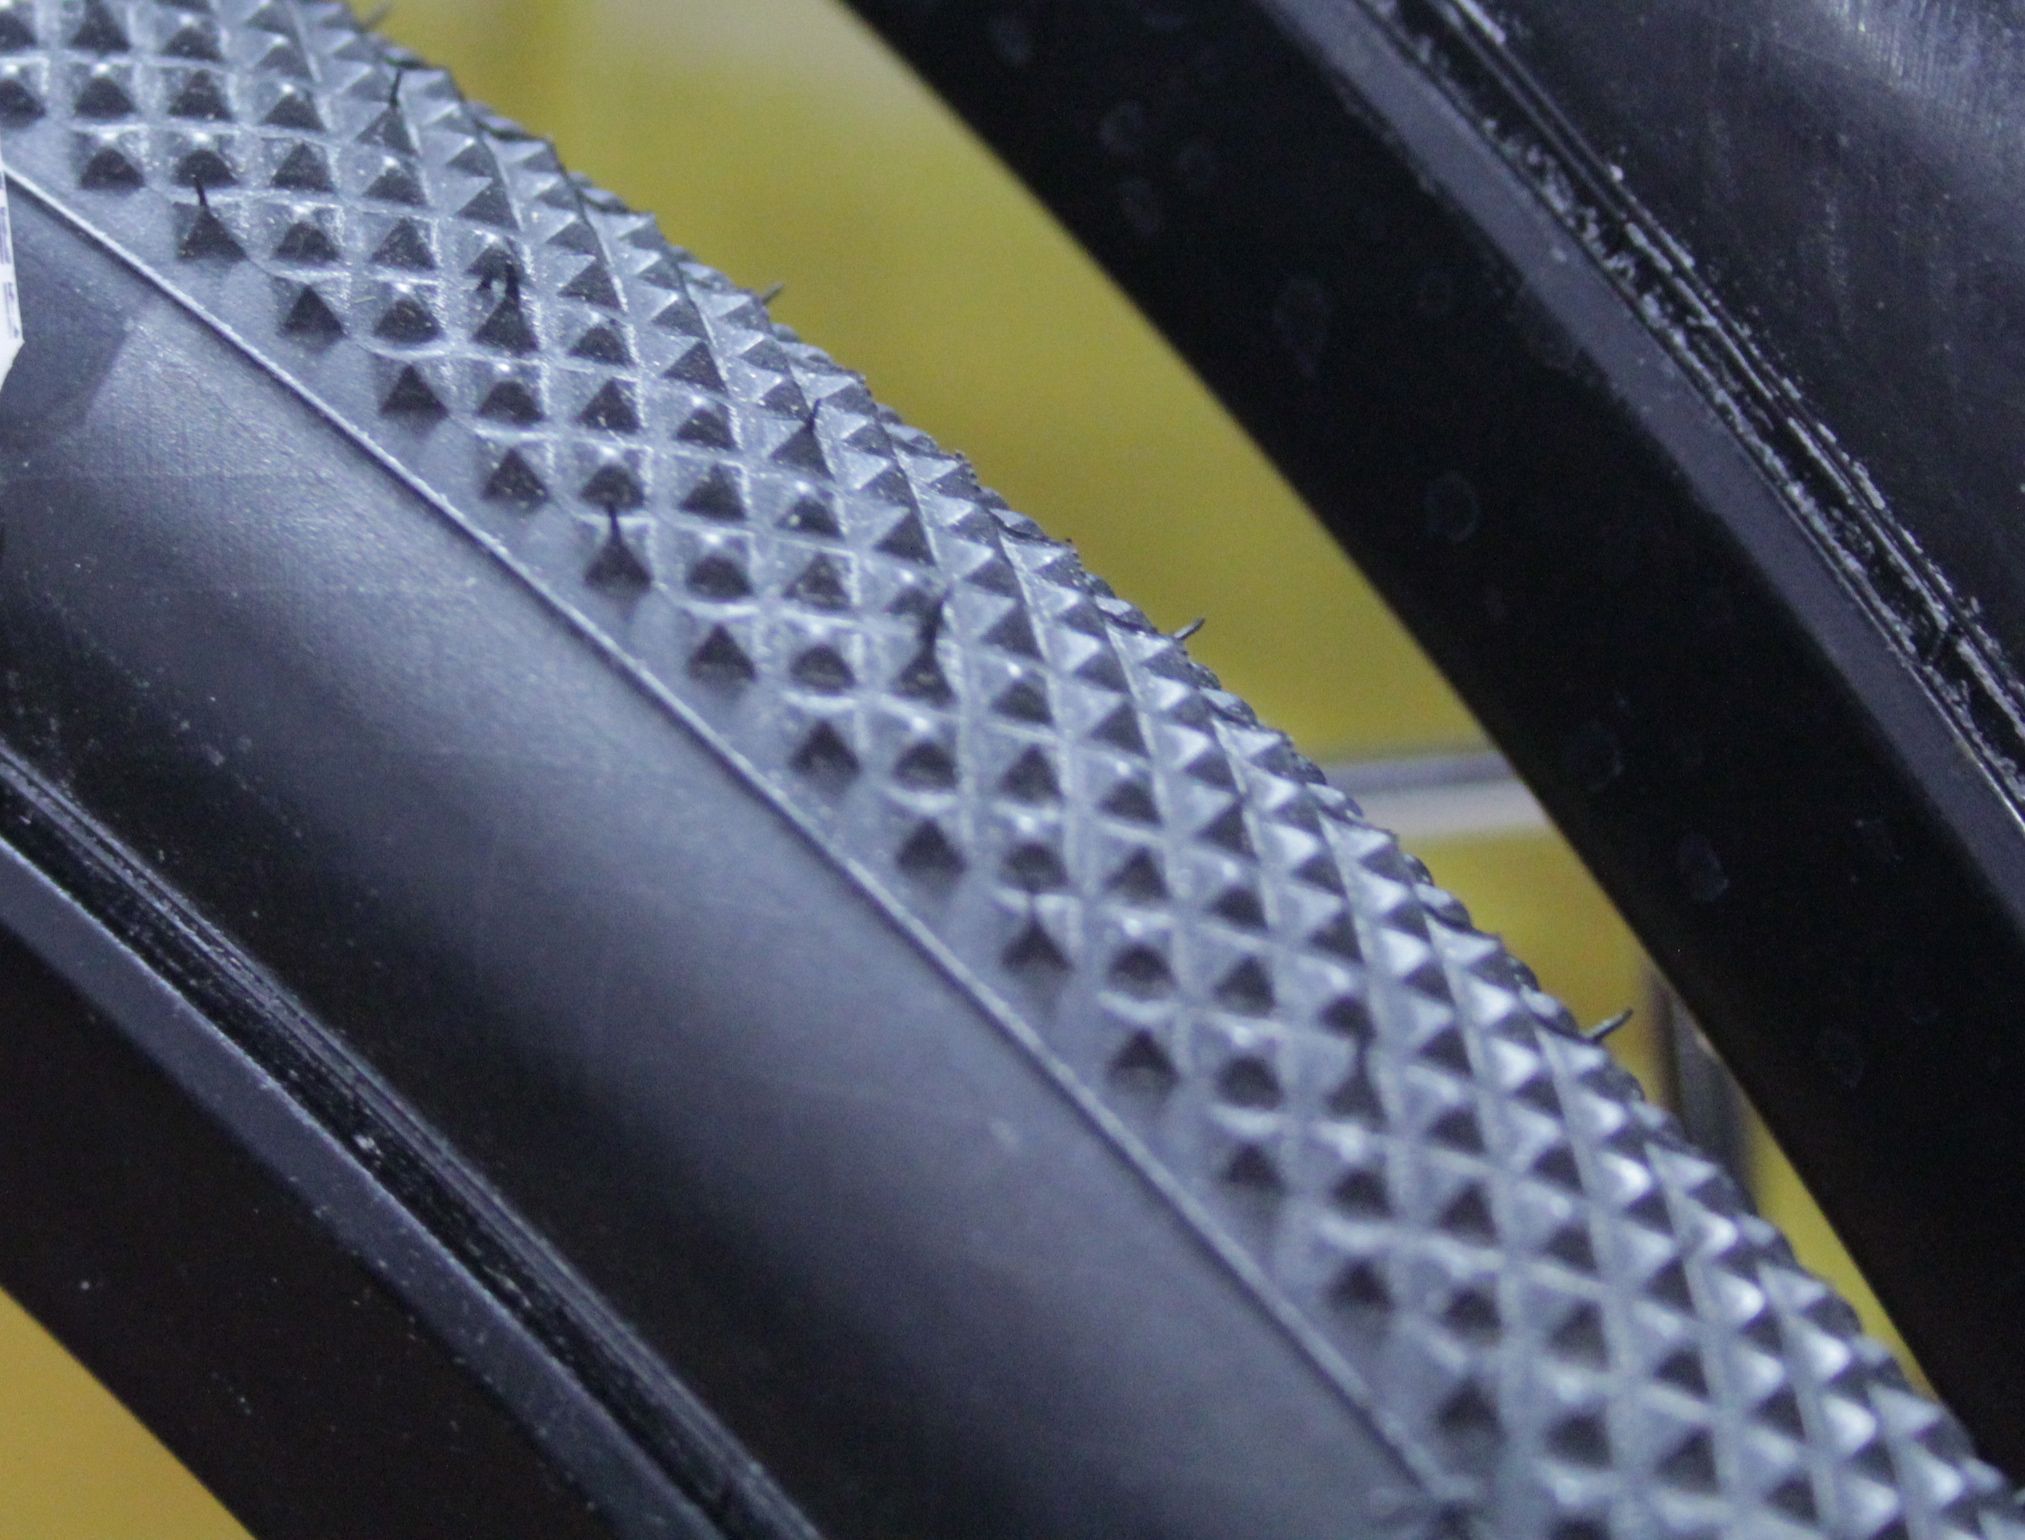 700 x 28 cyclocross tires